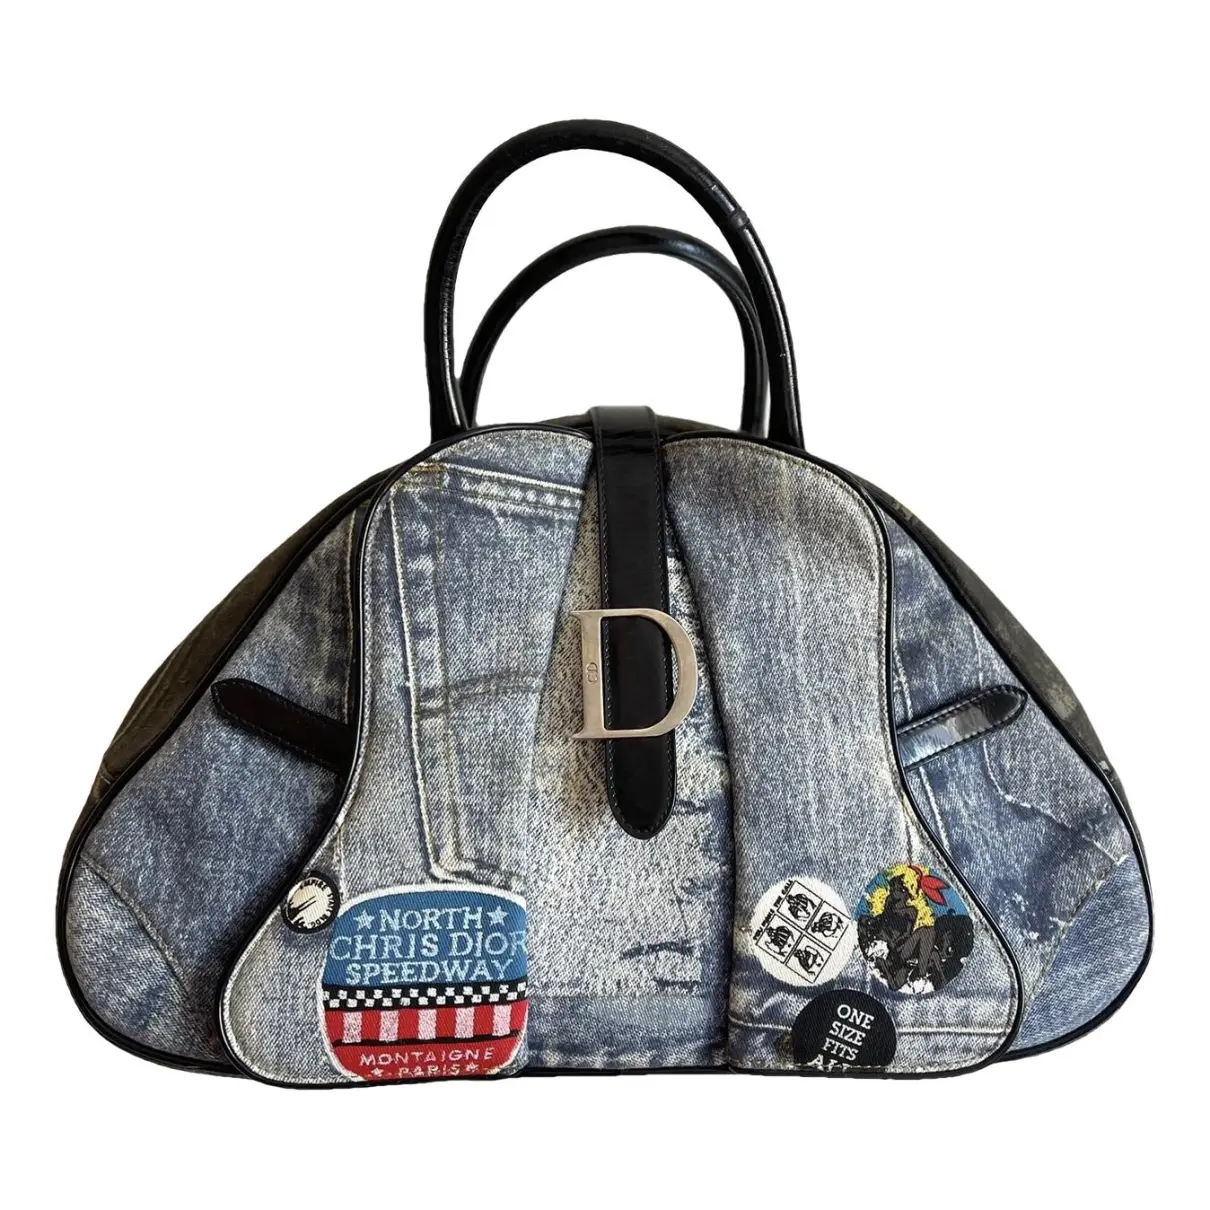 Saddle Bowler handbag